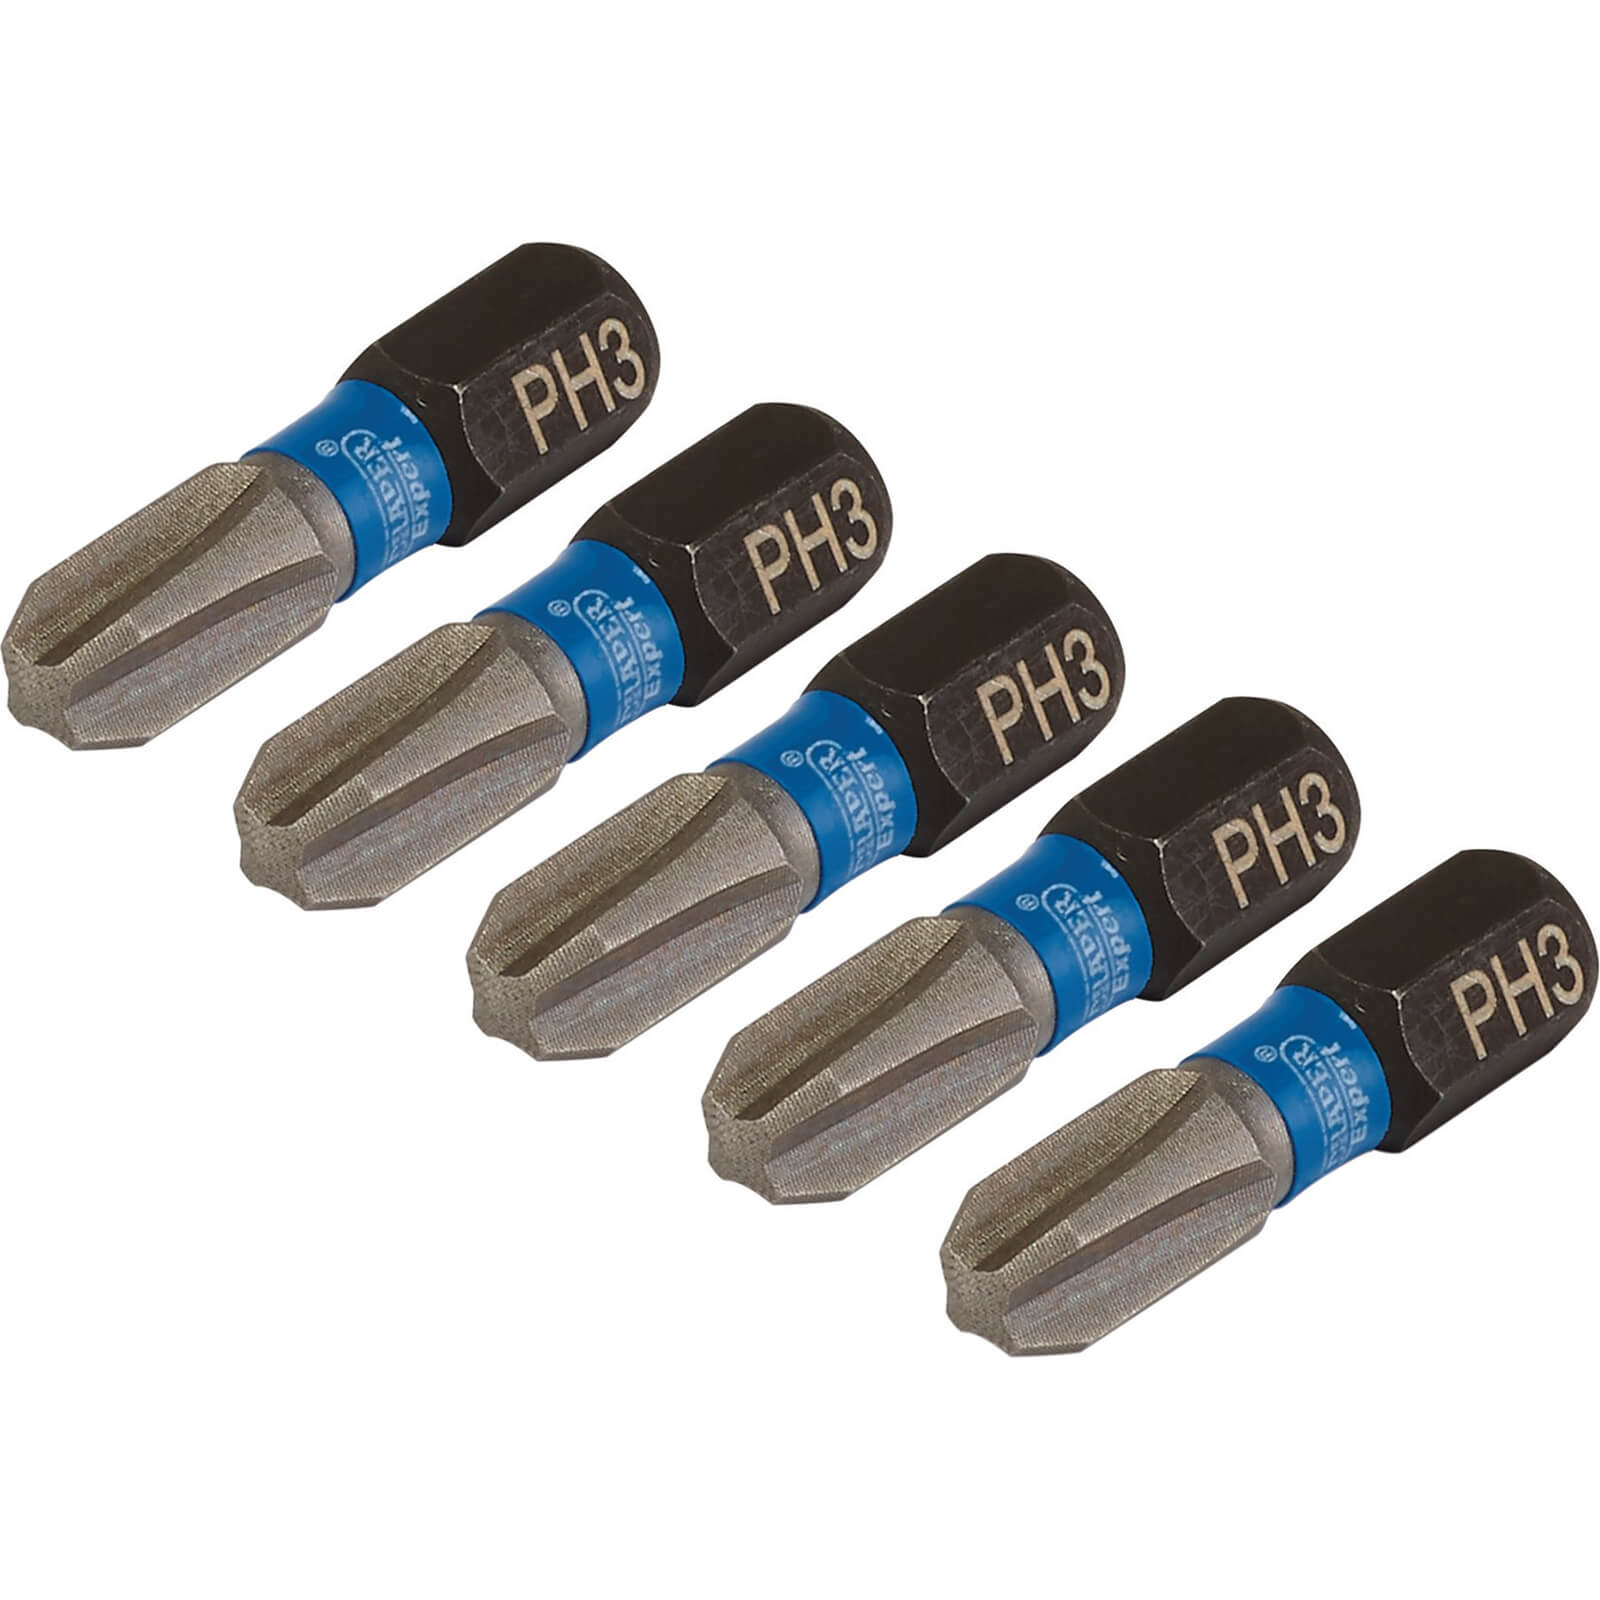 Draper Expert Impact Phillips Screwdriver Bits PH3 25mm Pack of 5